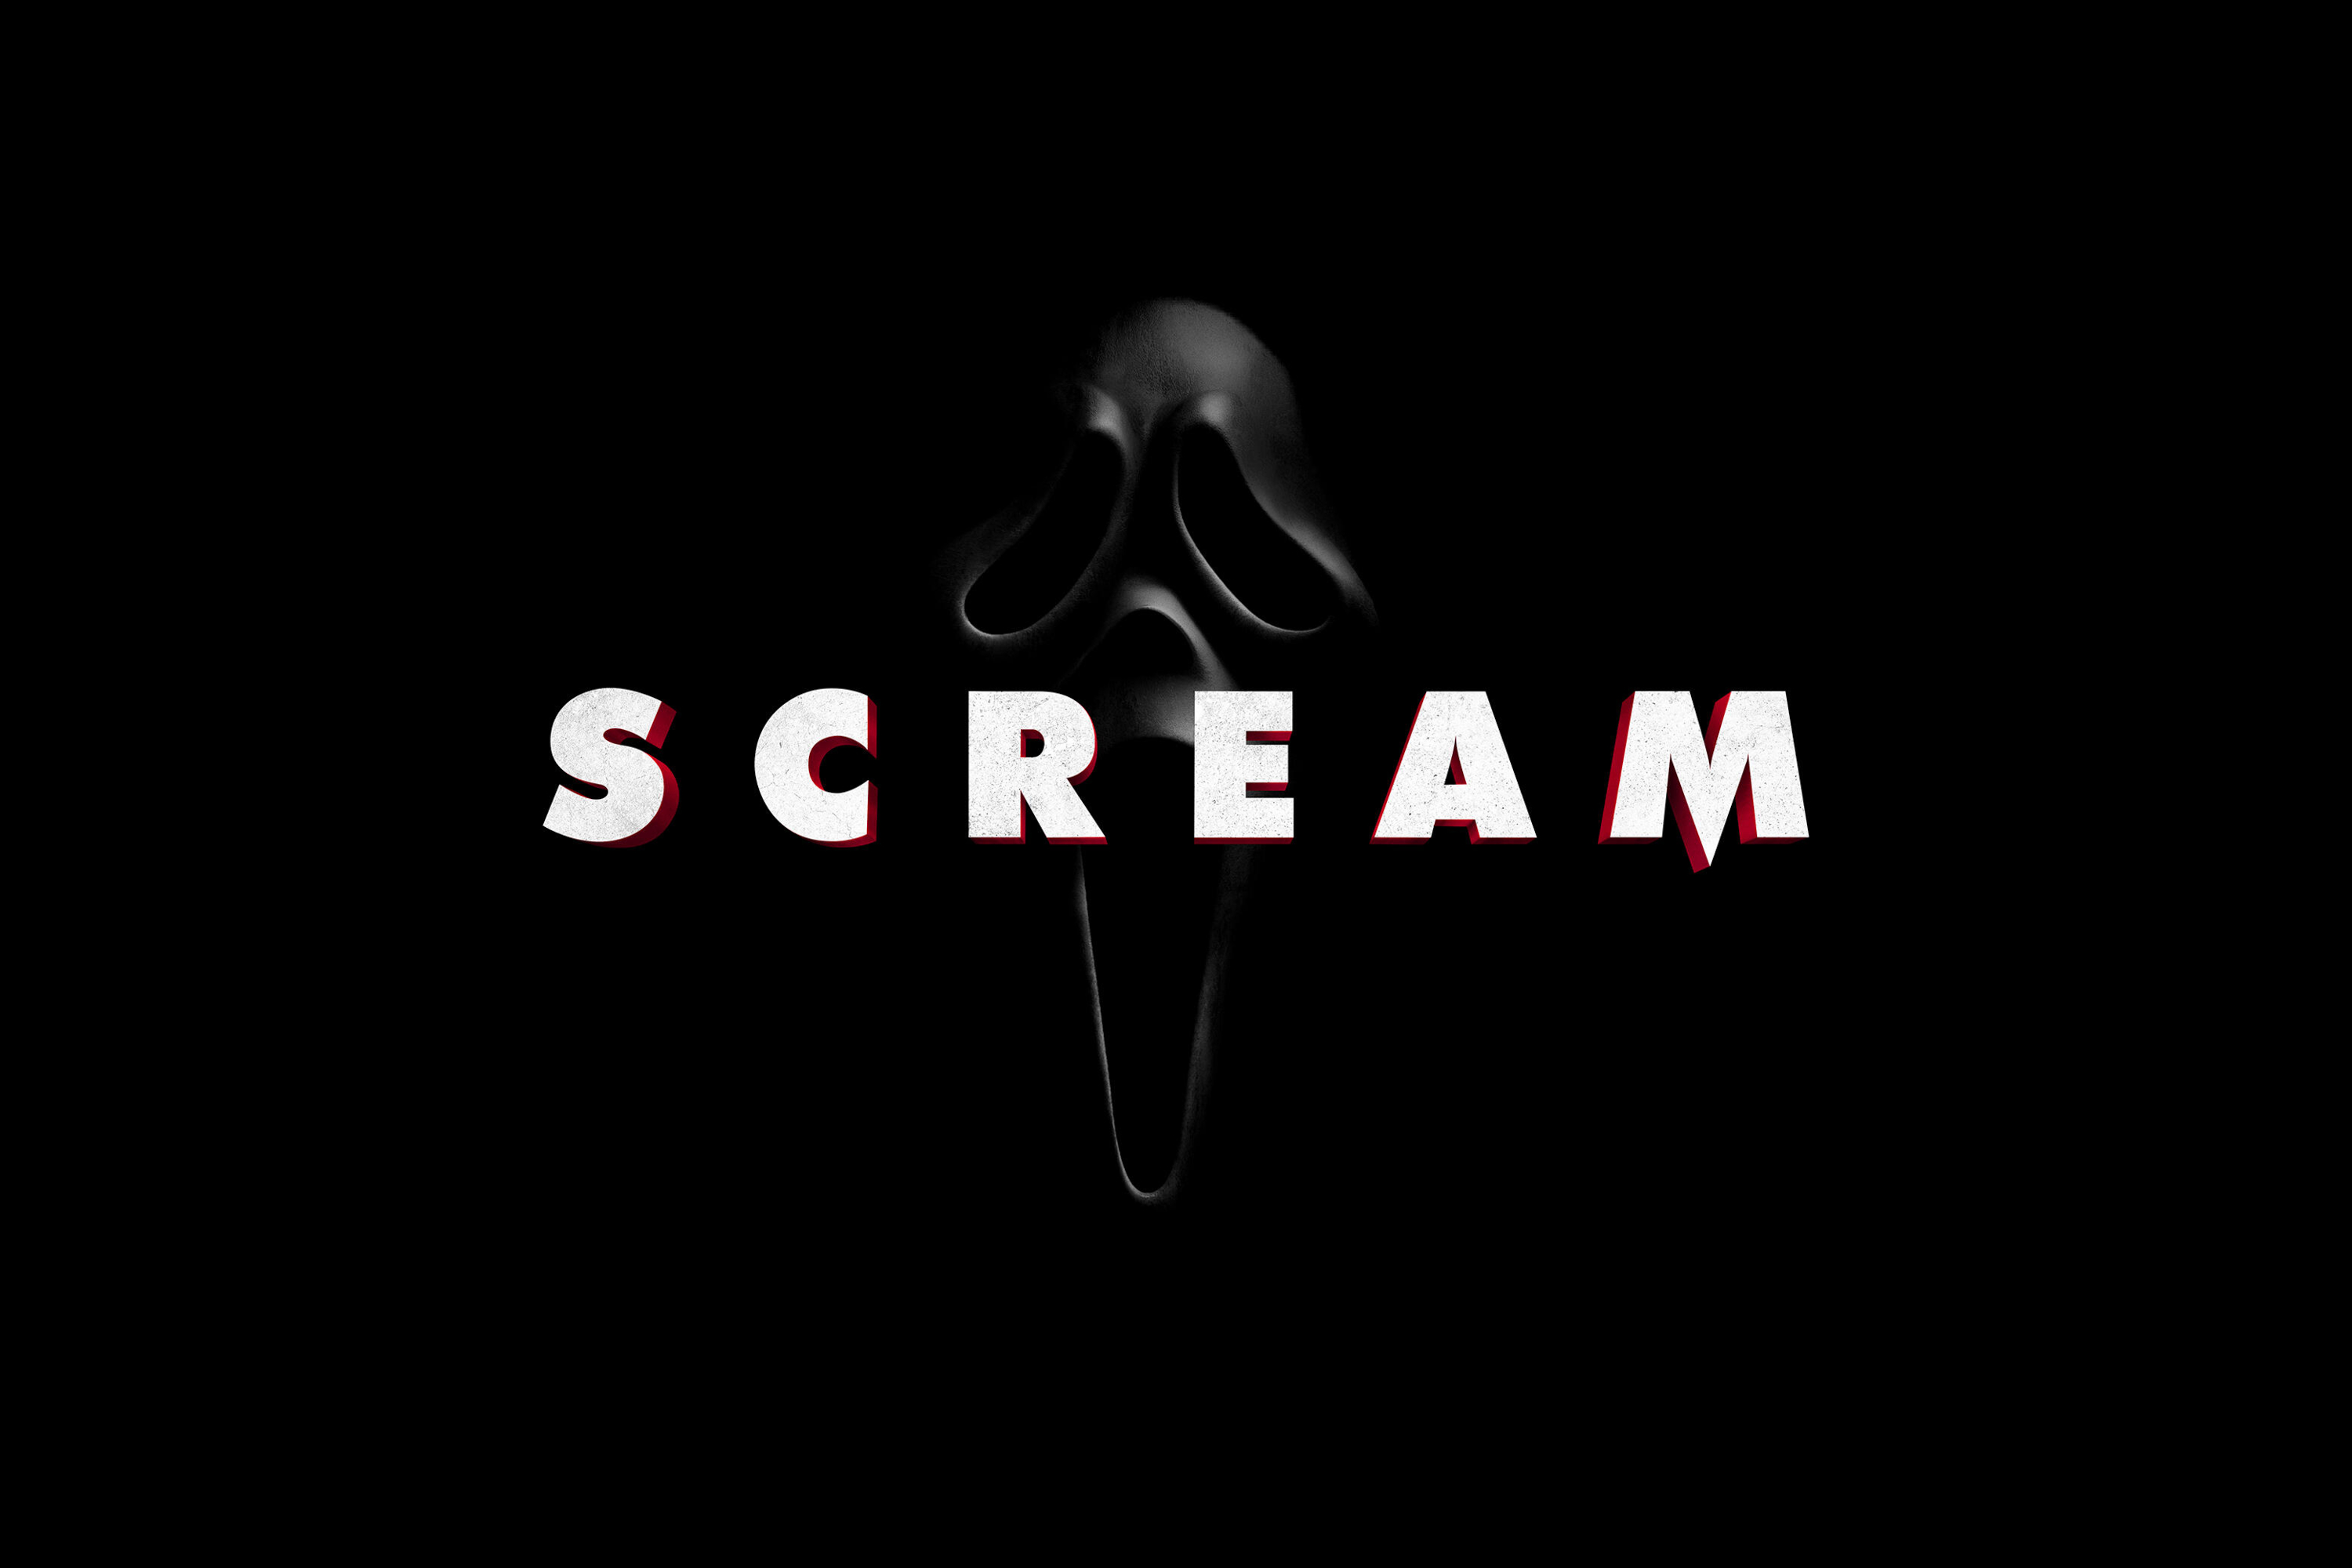 Scream (2022) HD Wallpaper